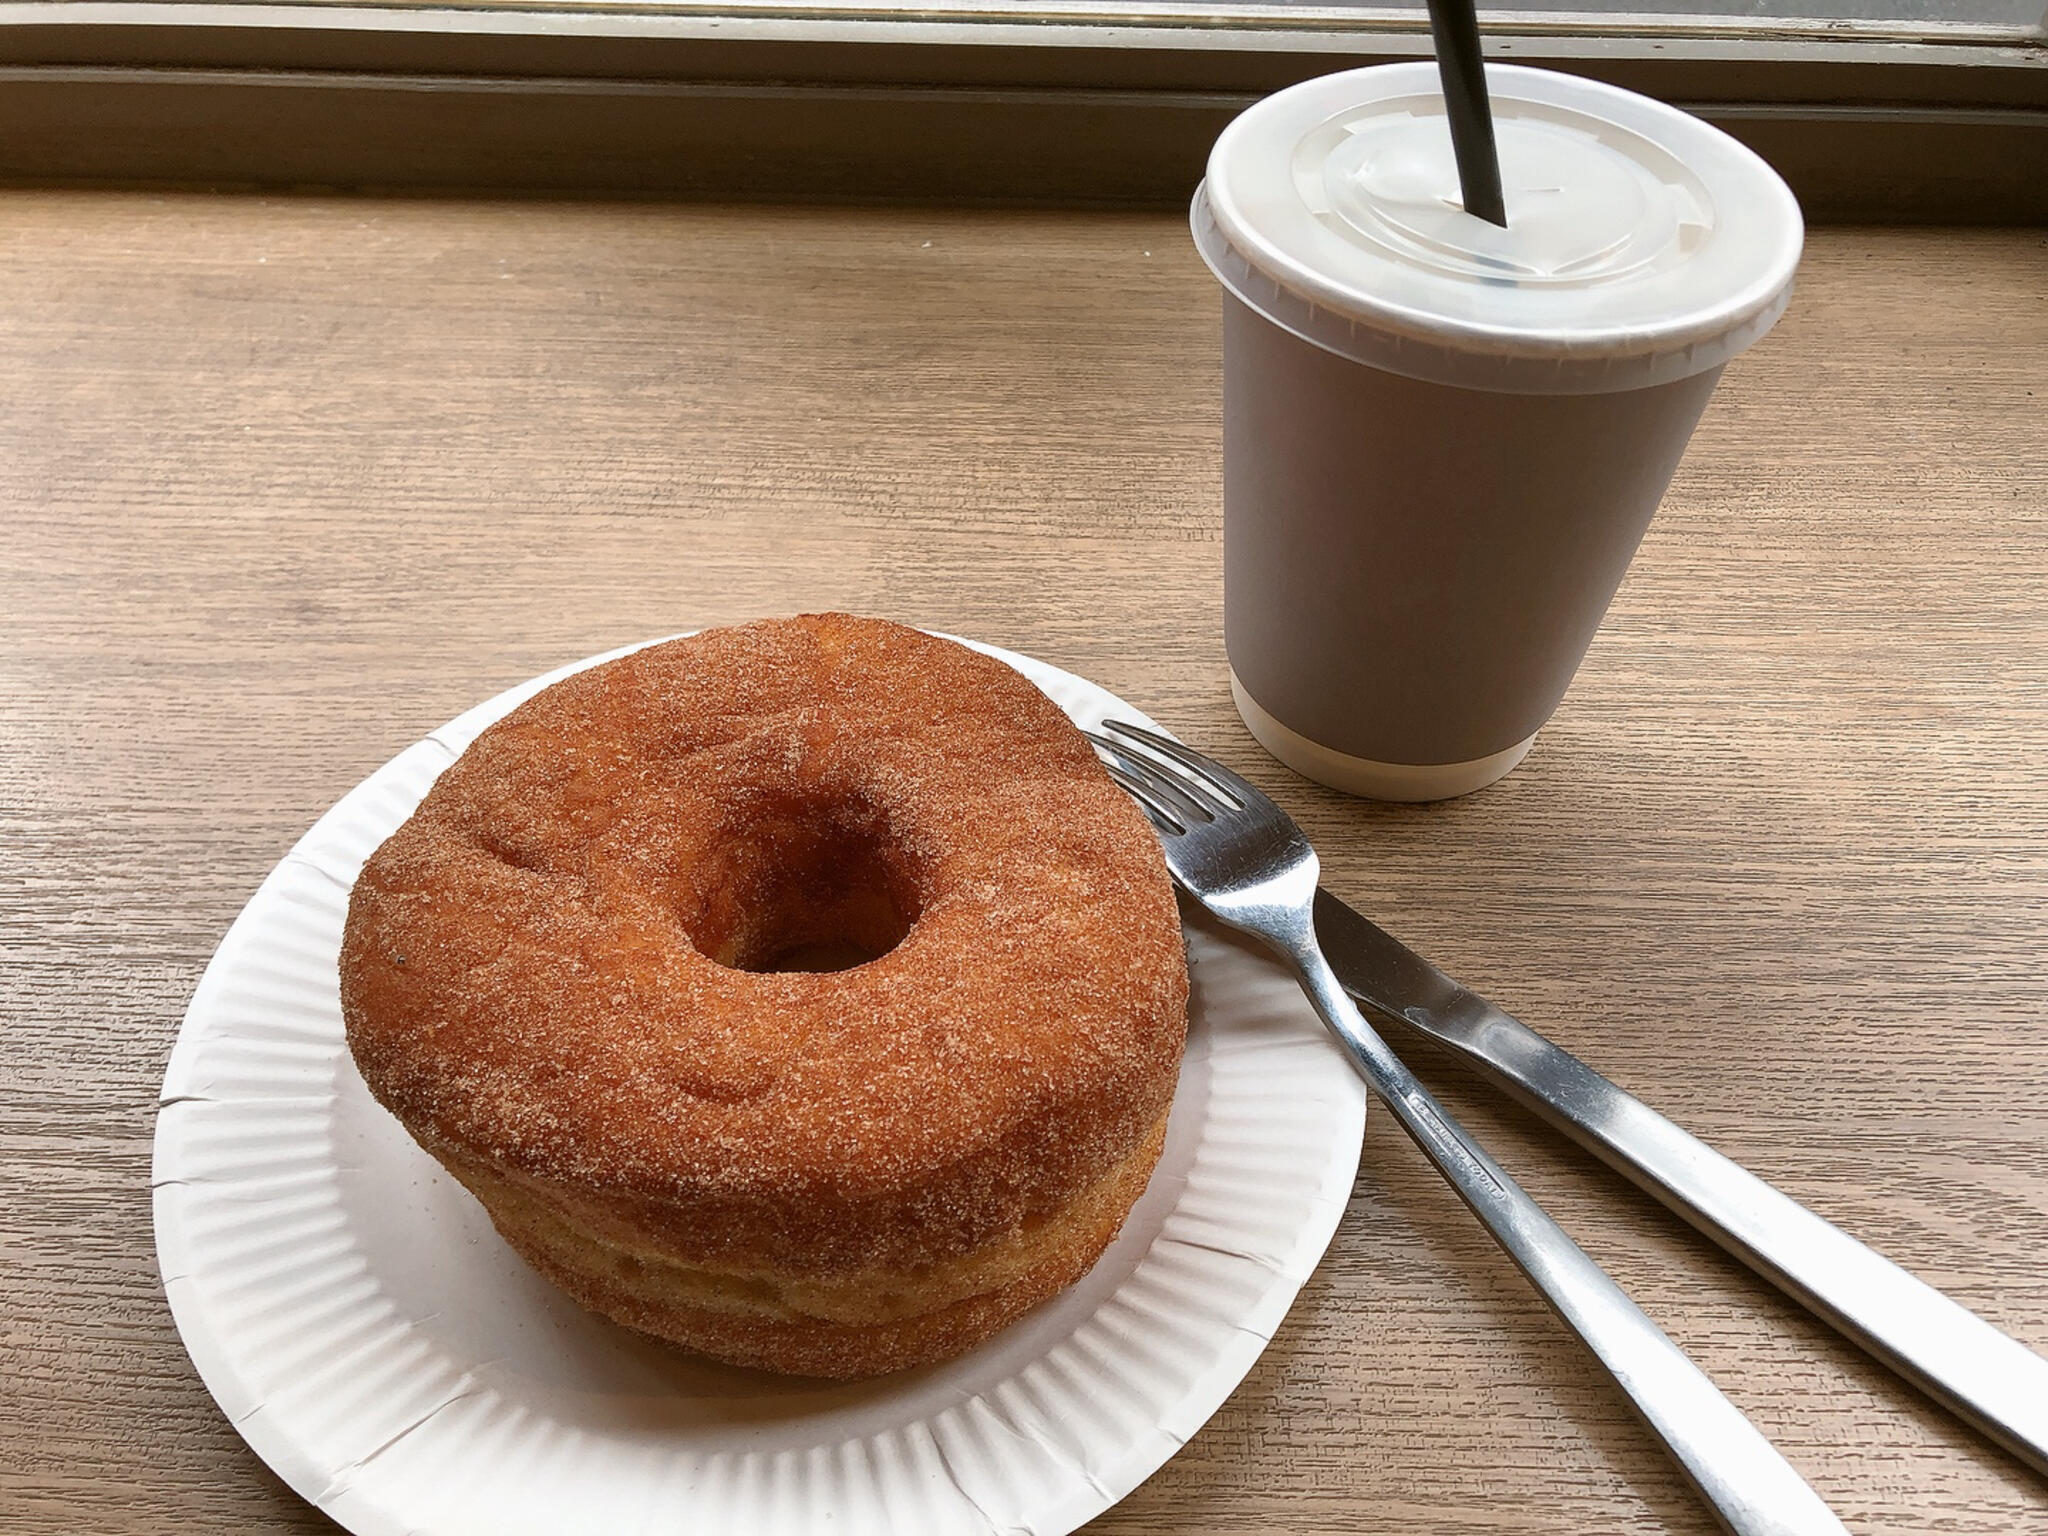 DUMBO Doughnuts and Coffeeの代表写真1